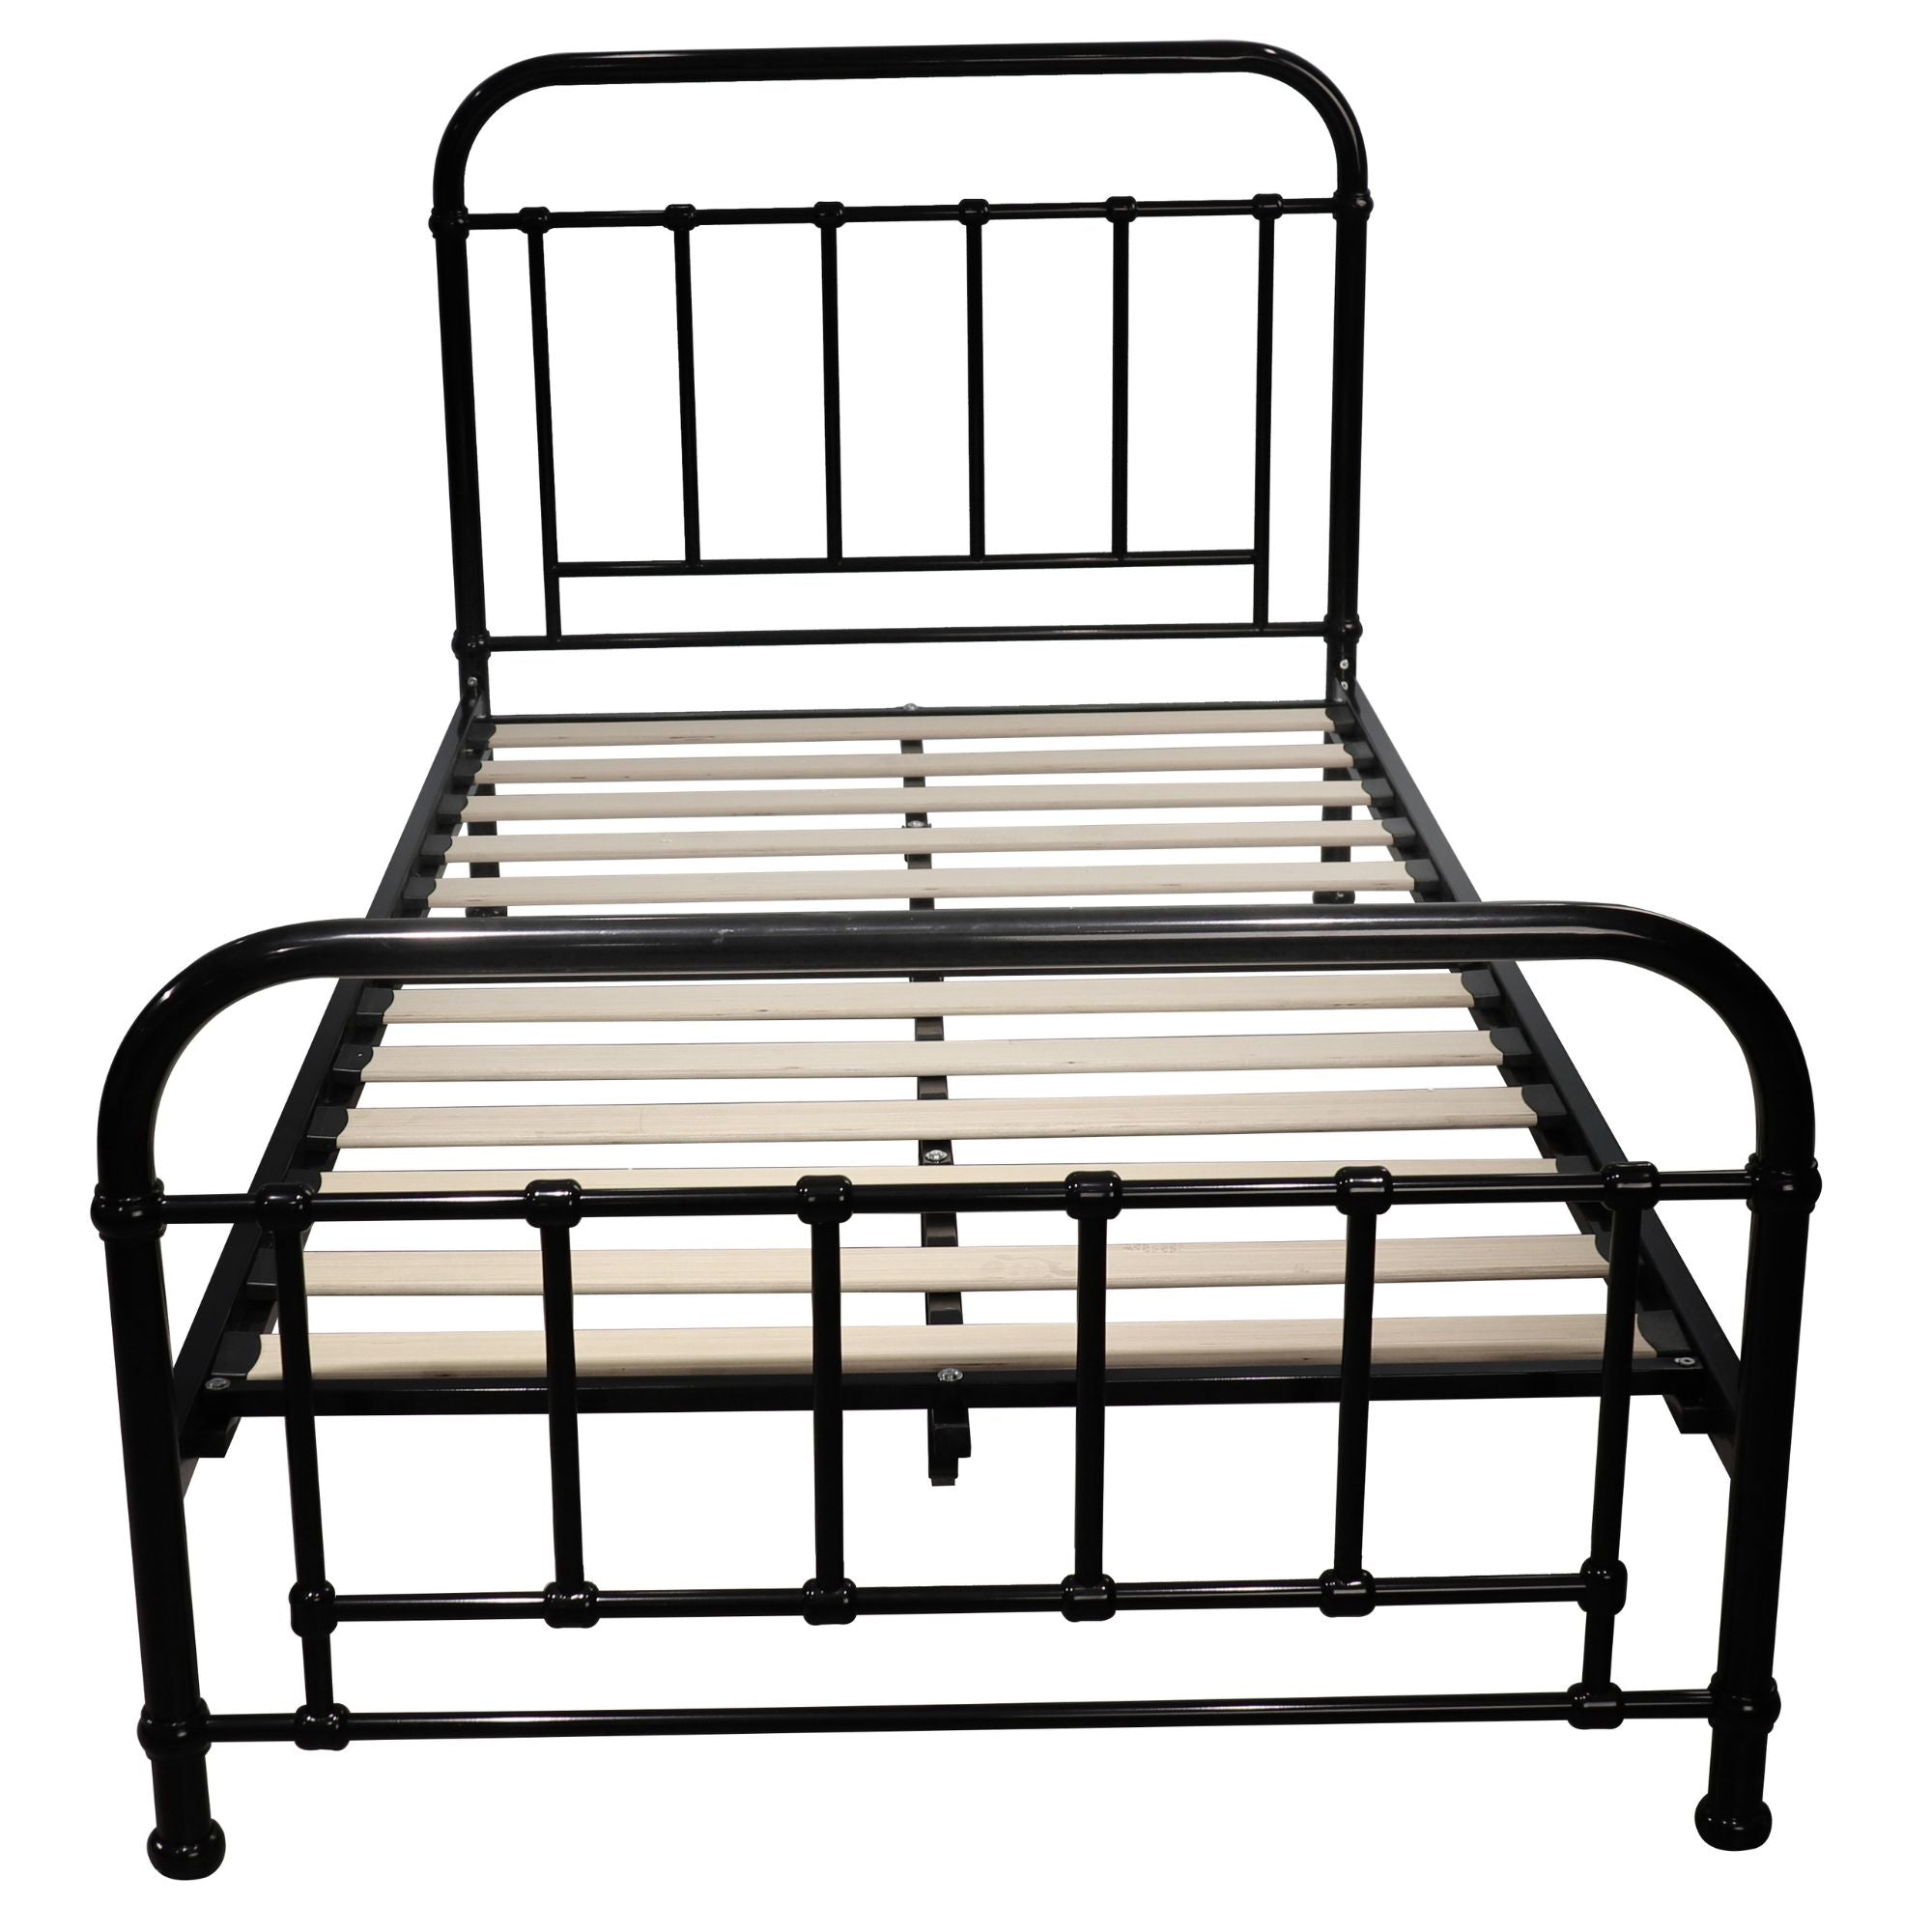 King Single Bed Size Metal Frame Platform Mattress Base - Black